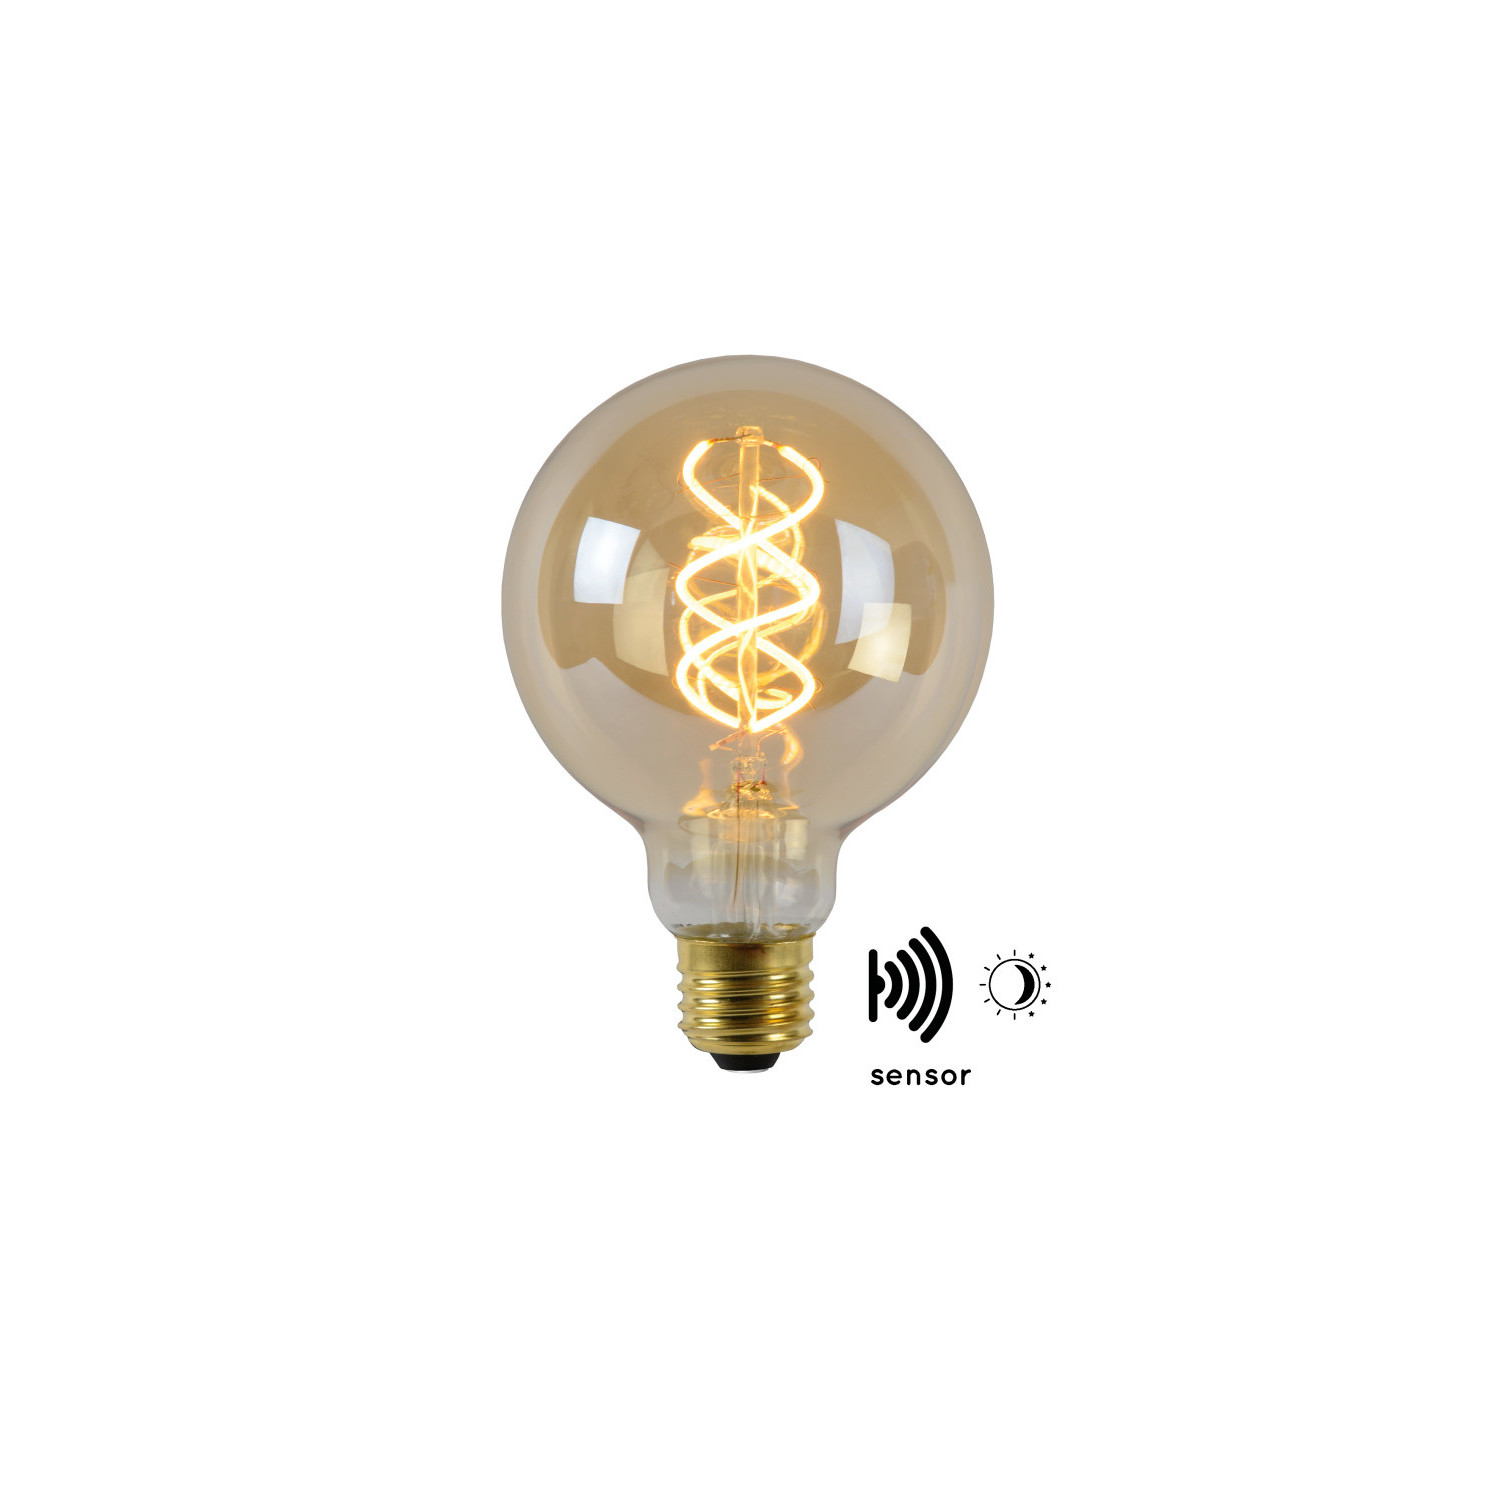 Extra Sada omverwerping Lucide G95 TWILIGHT SENSOR - Filament lamp Buiten - Ø 9,5 cm - LED - E27 -  1x4W 2200K - Amber - Lamponline.nl